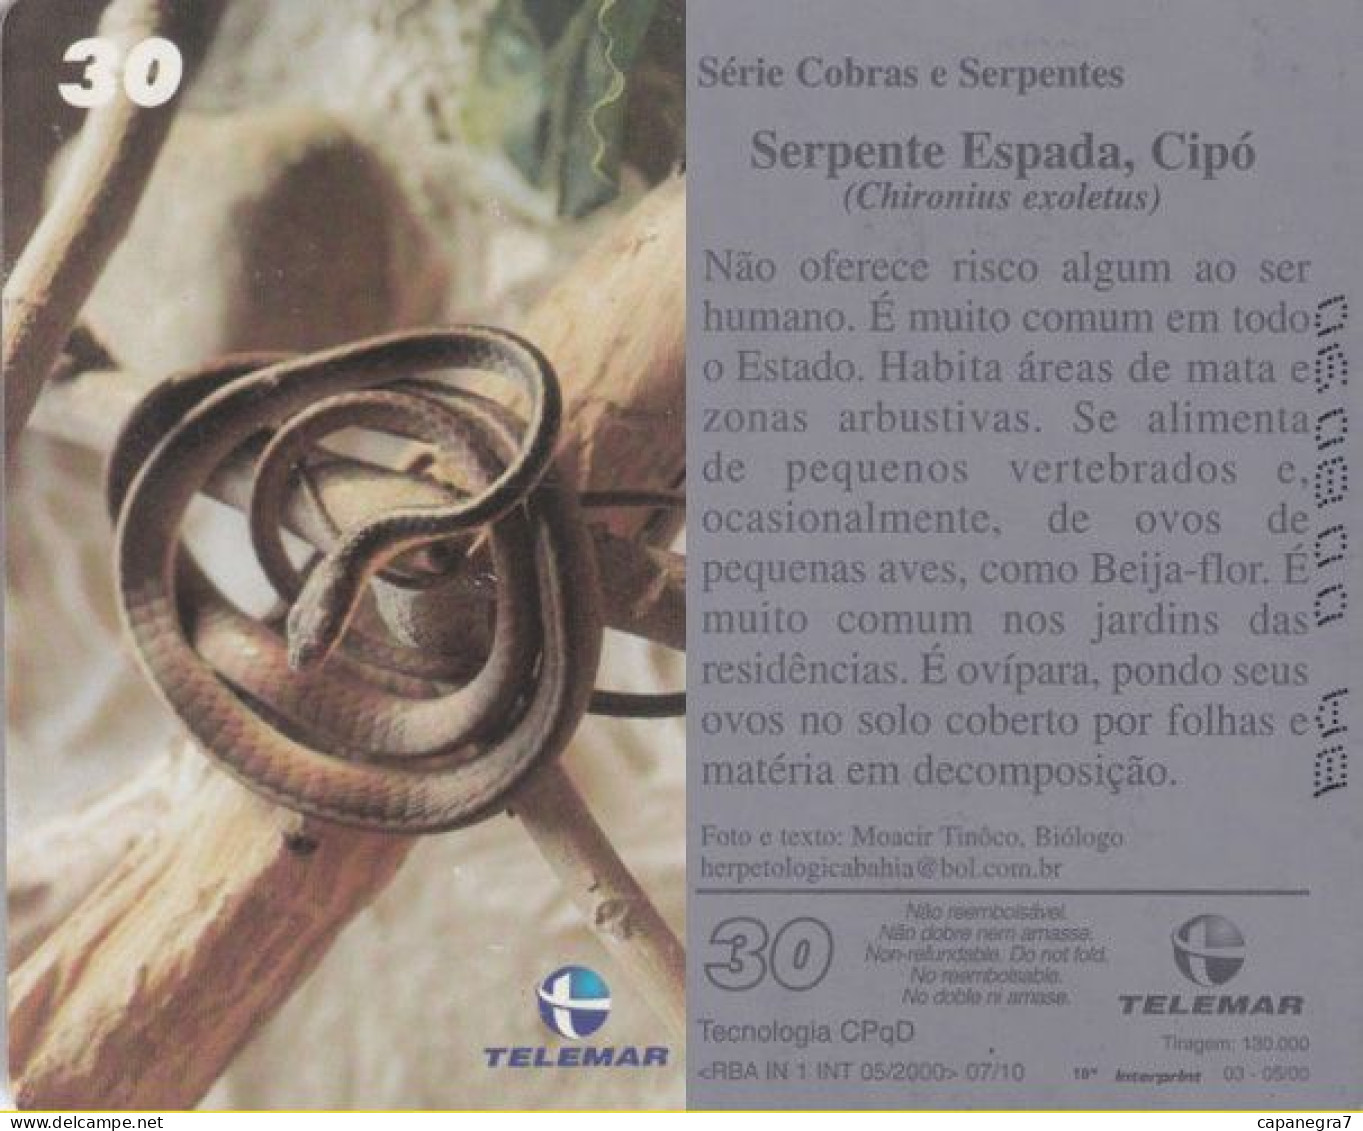 Chironius Exoletus, Reptil, Brasilien, Telemar - Brazil